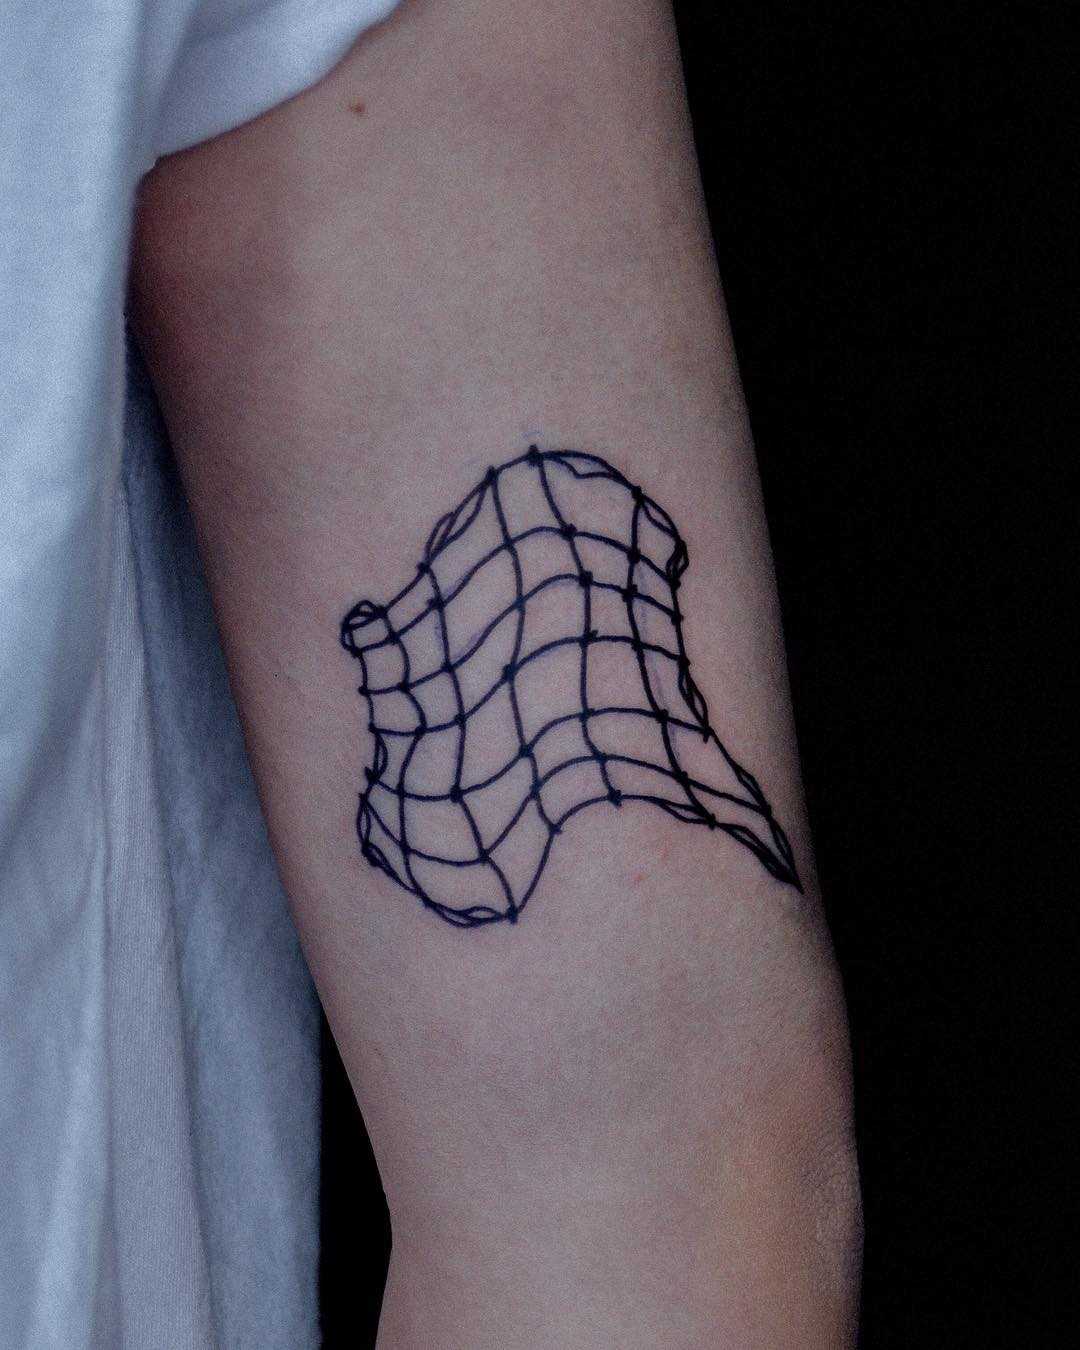 Abstract net tattoo by tattooist Bongkee